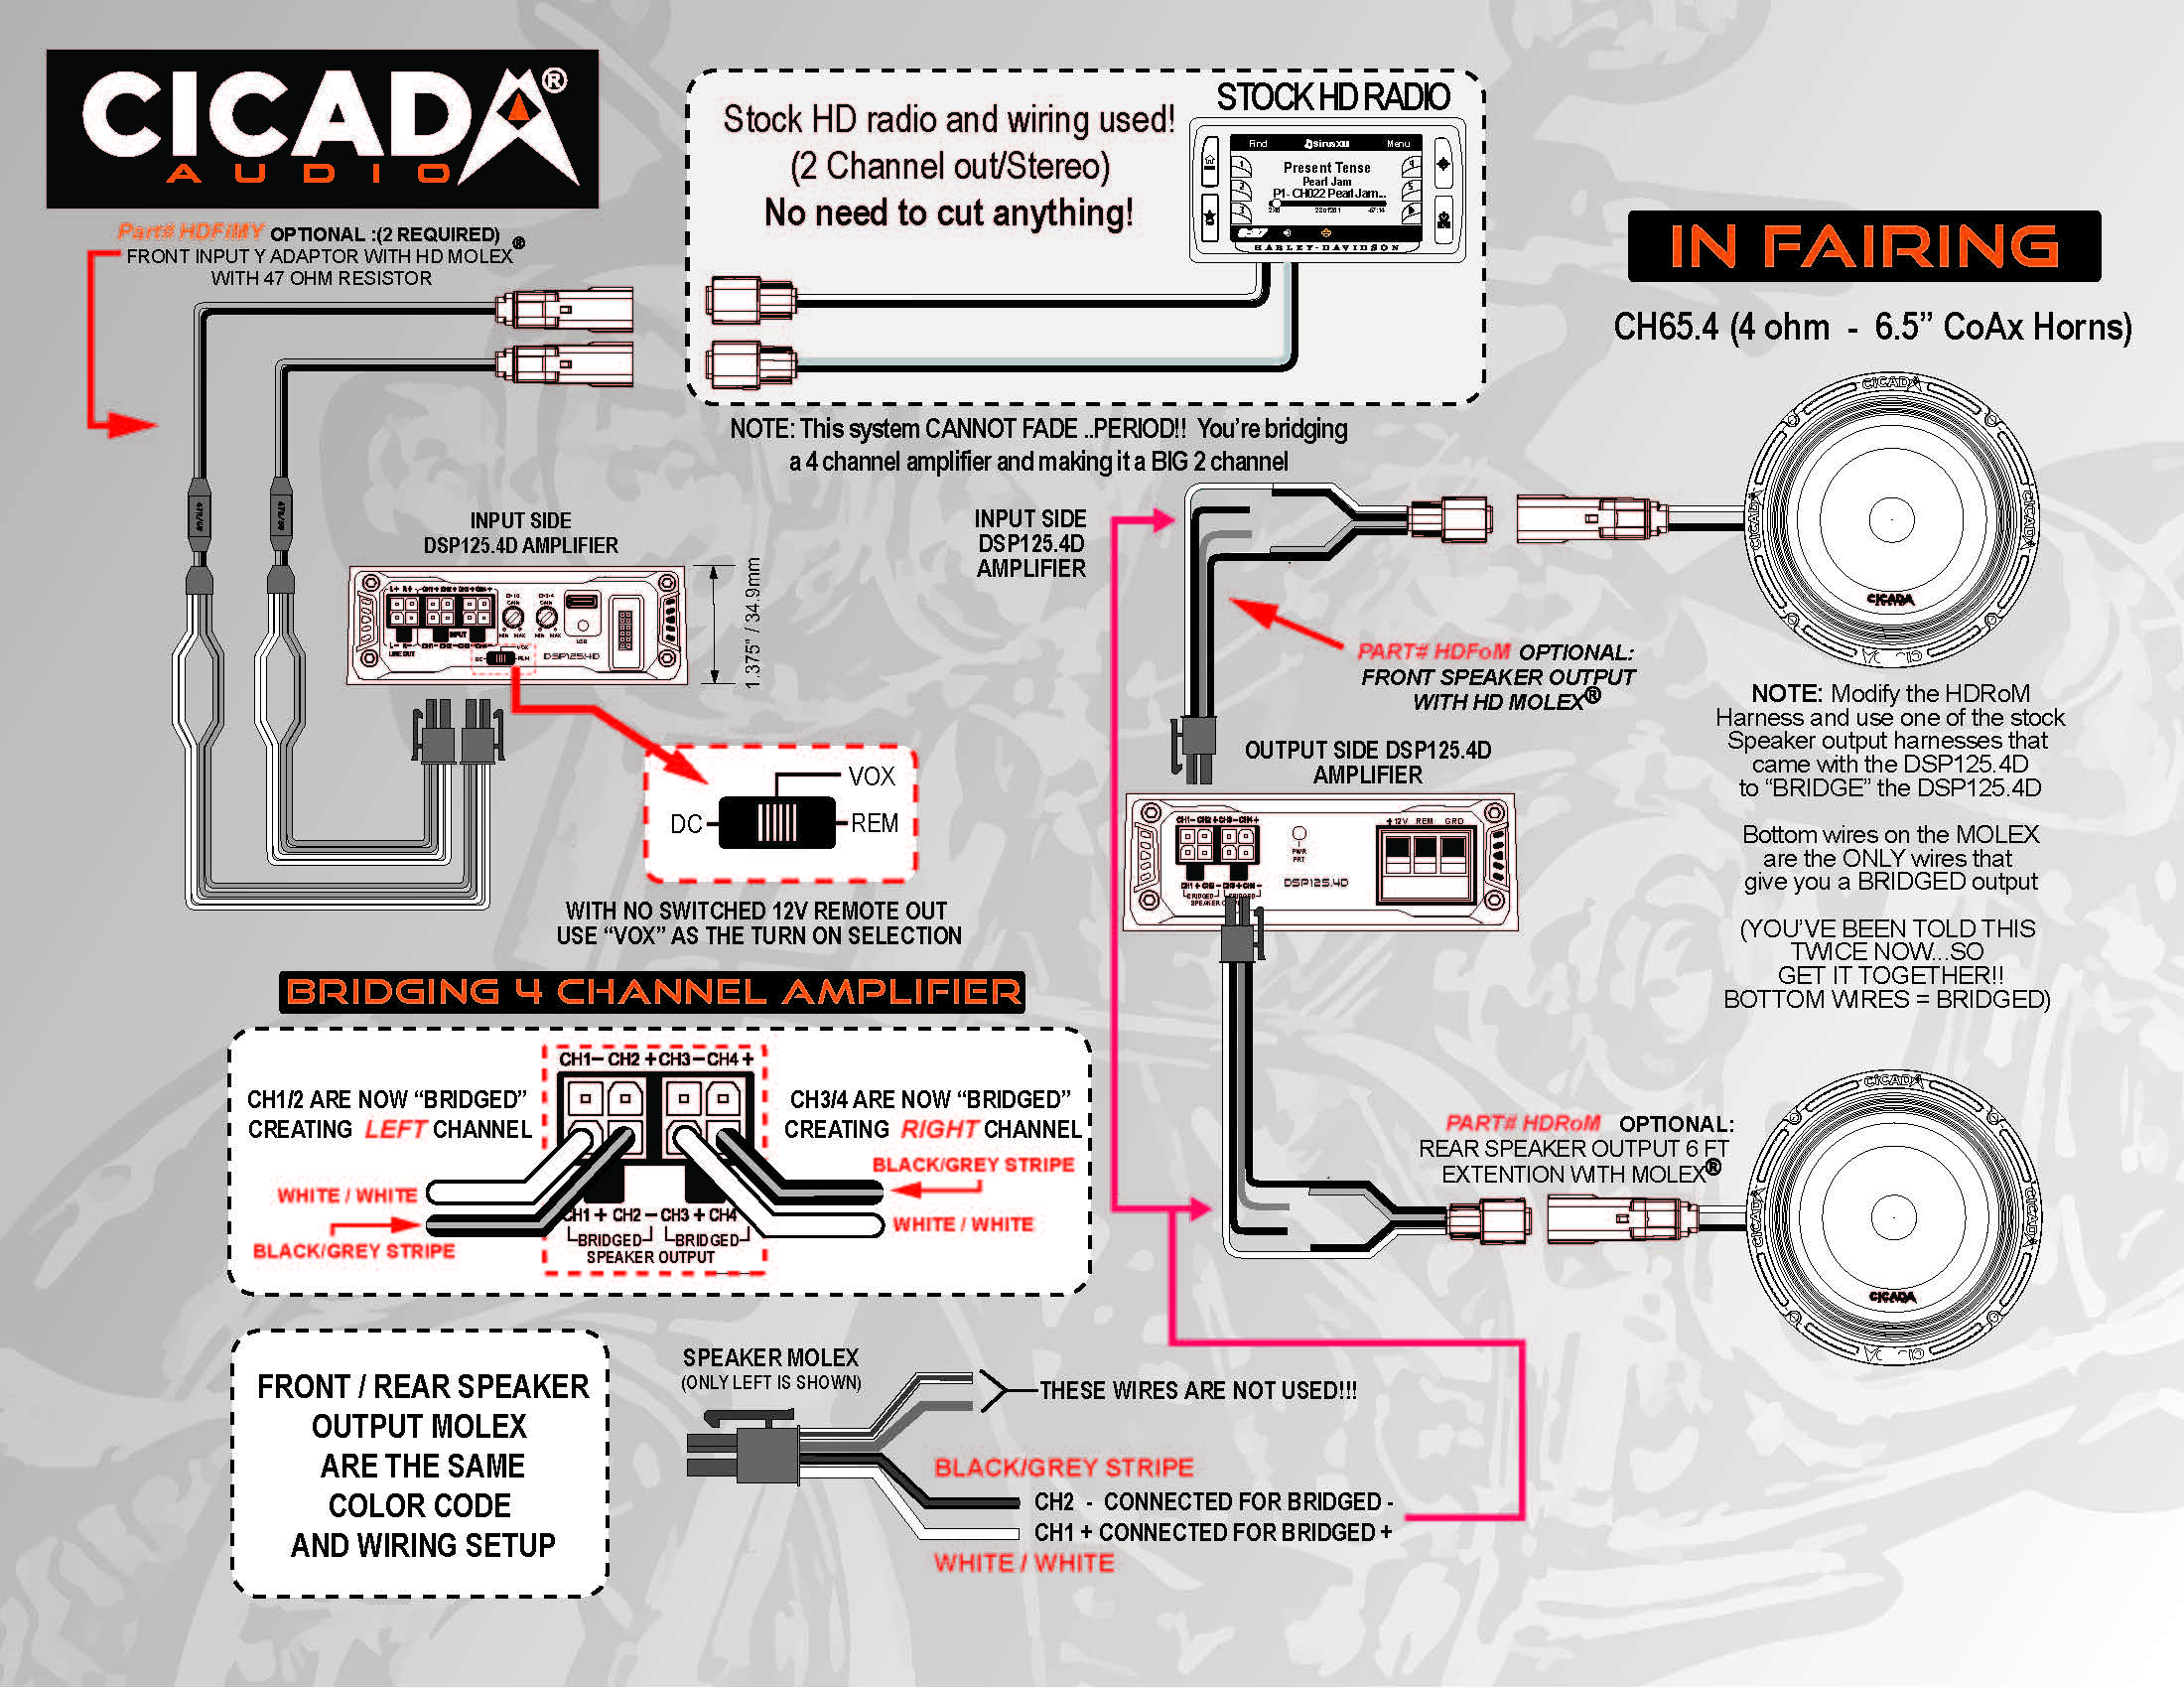 CICADA SYSTEM 3 COMP Page 2